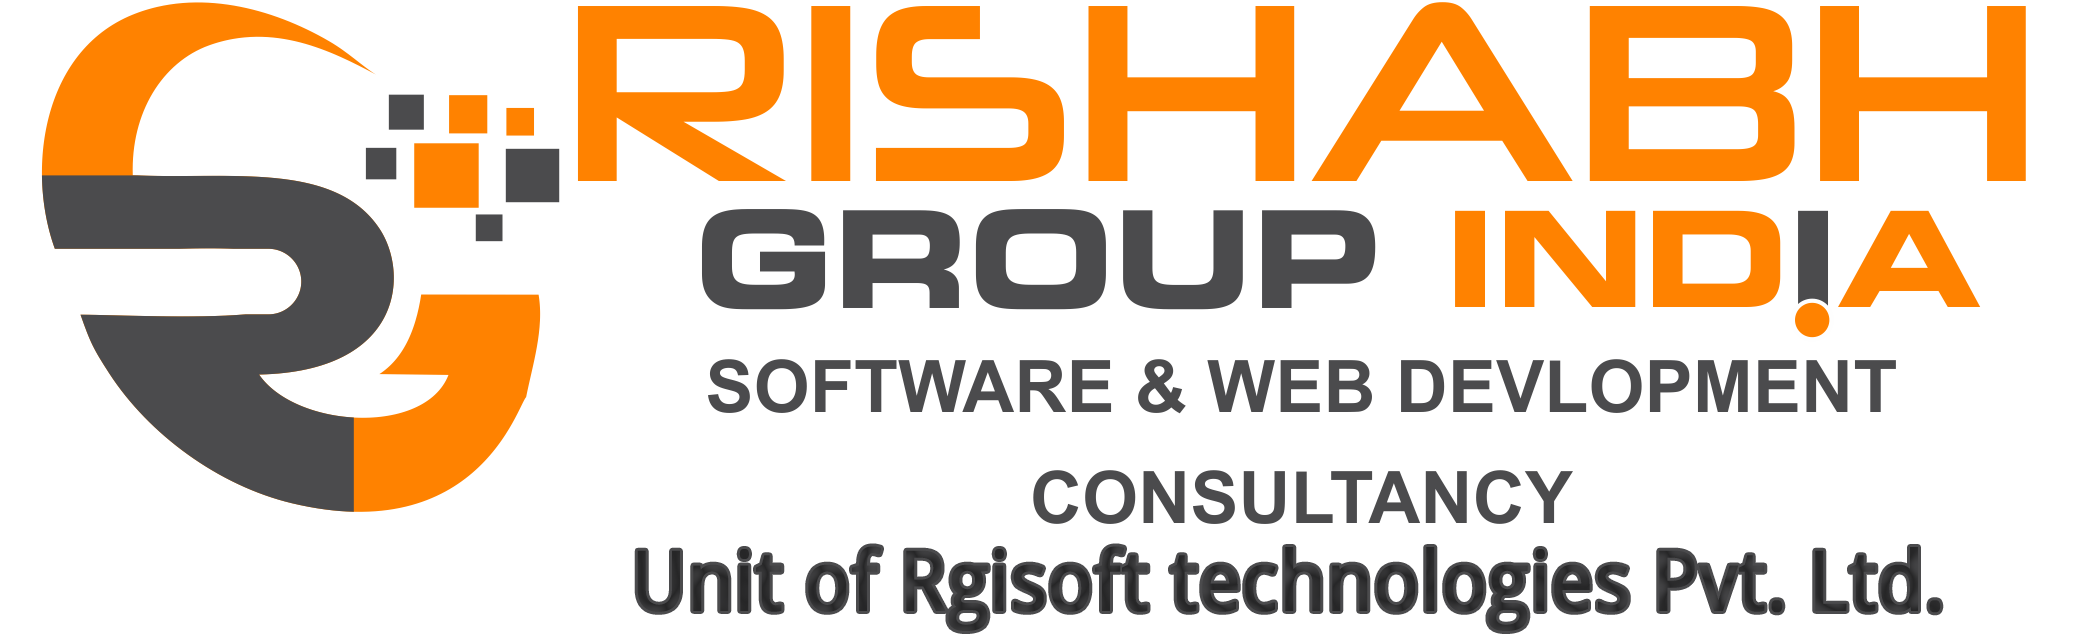 Rishabh Group India